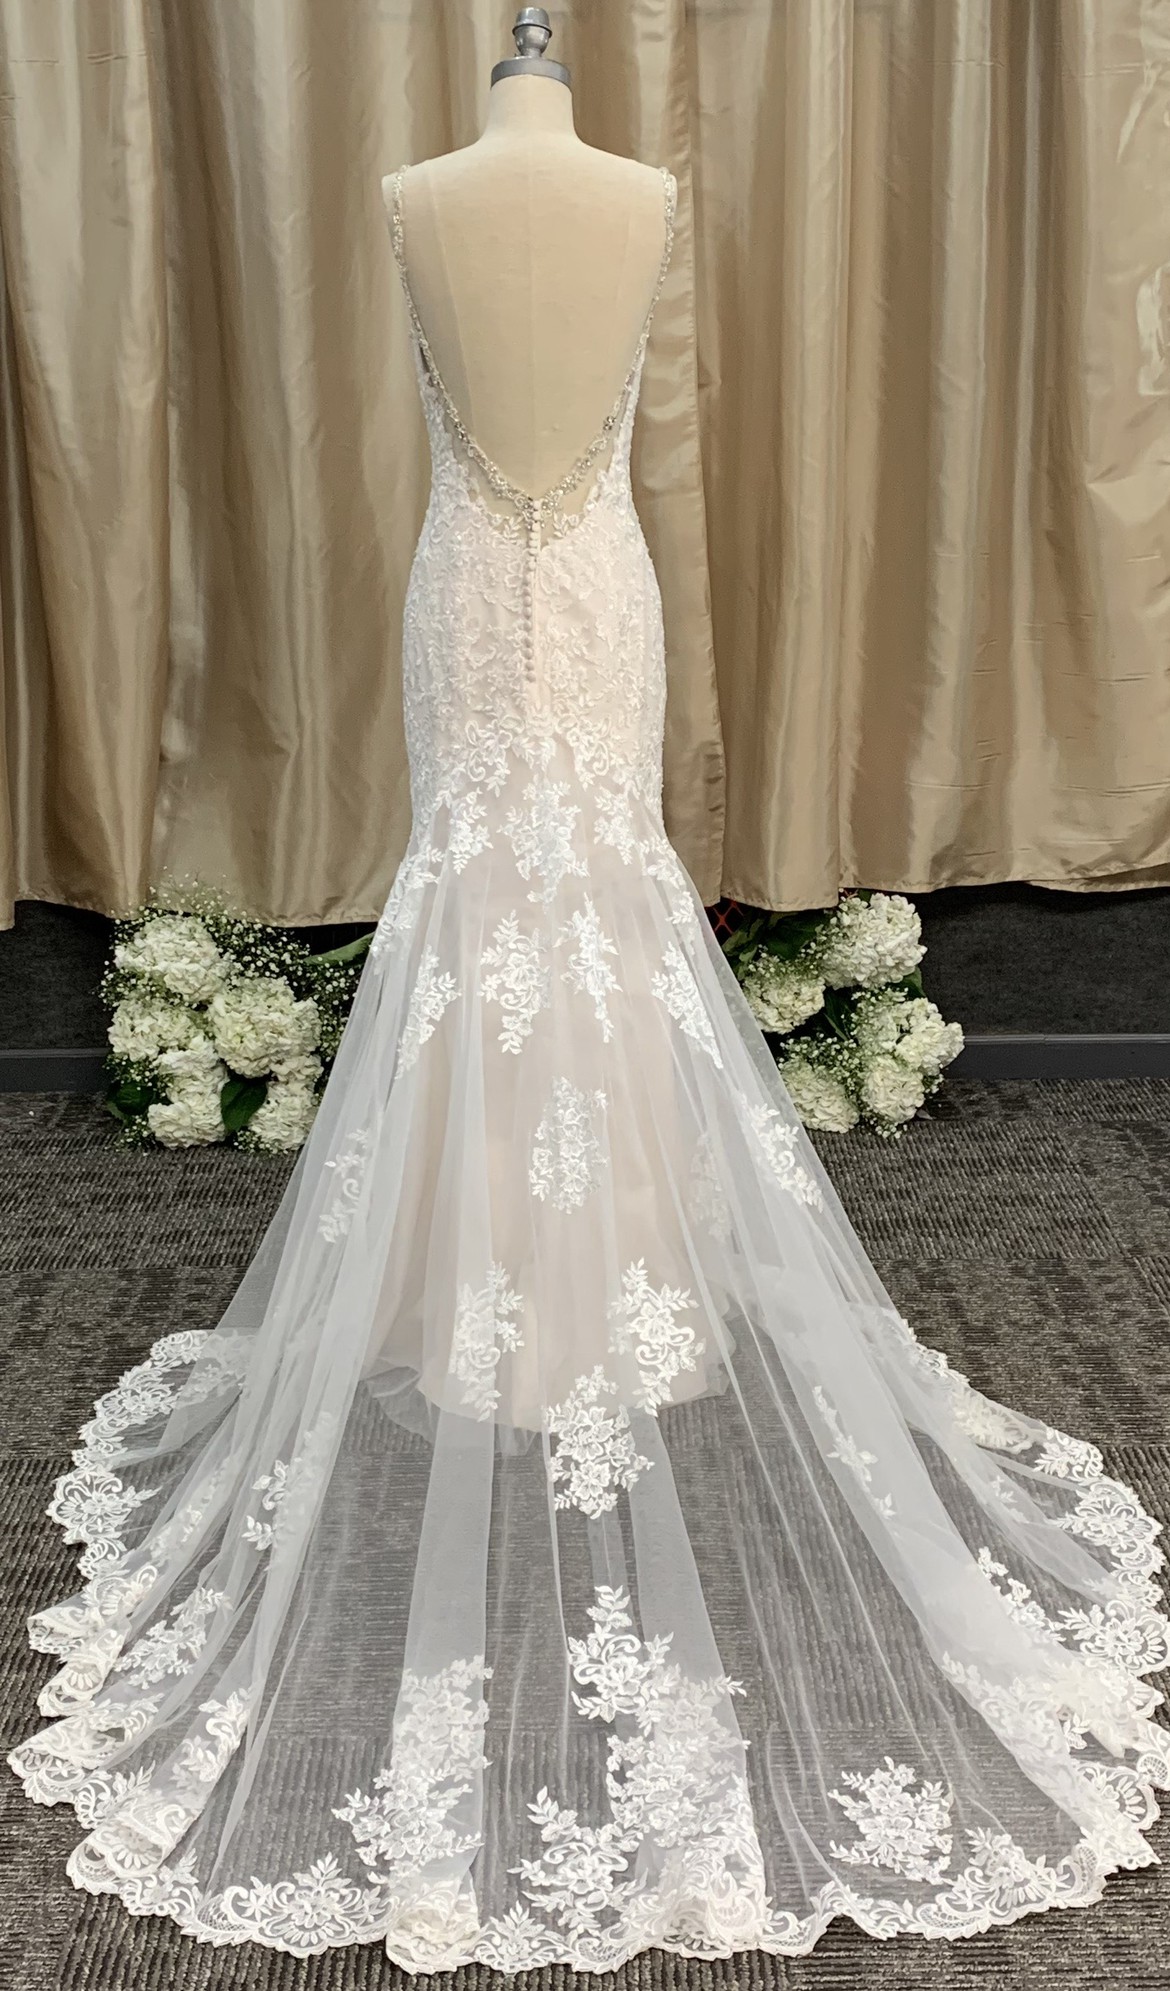 Jessica Morgan September Sample Wedding Dress Save 58% - Stillwhite